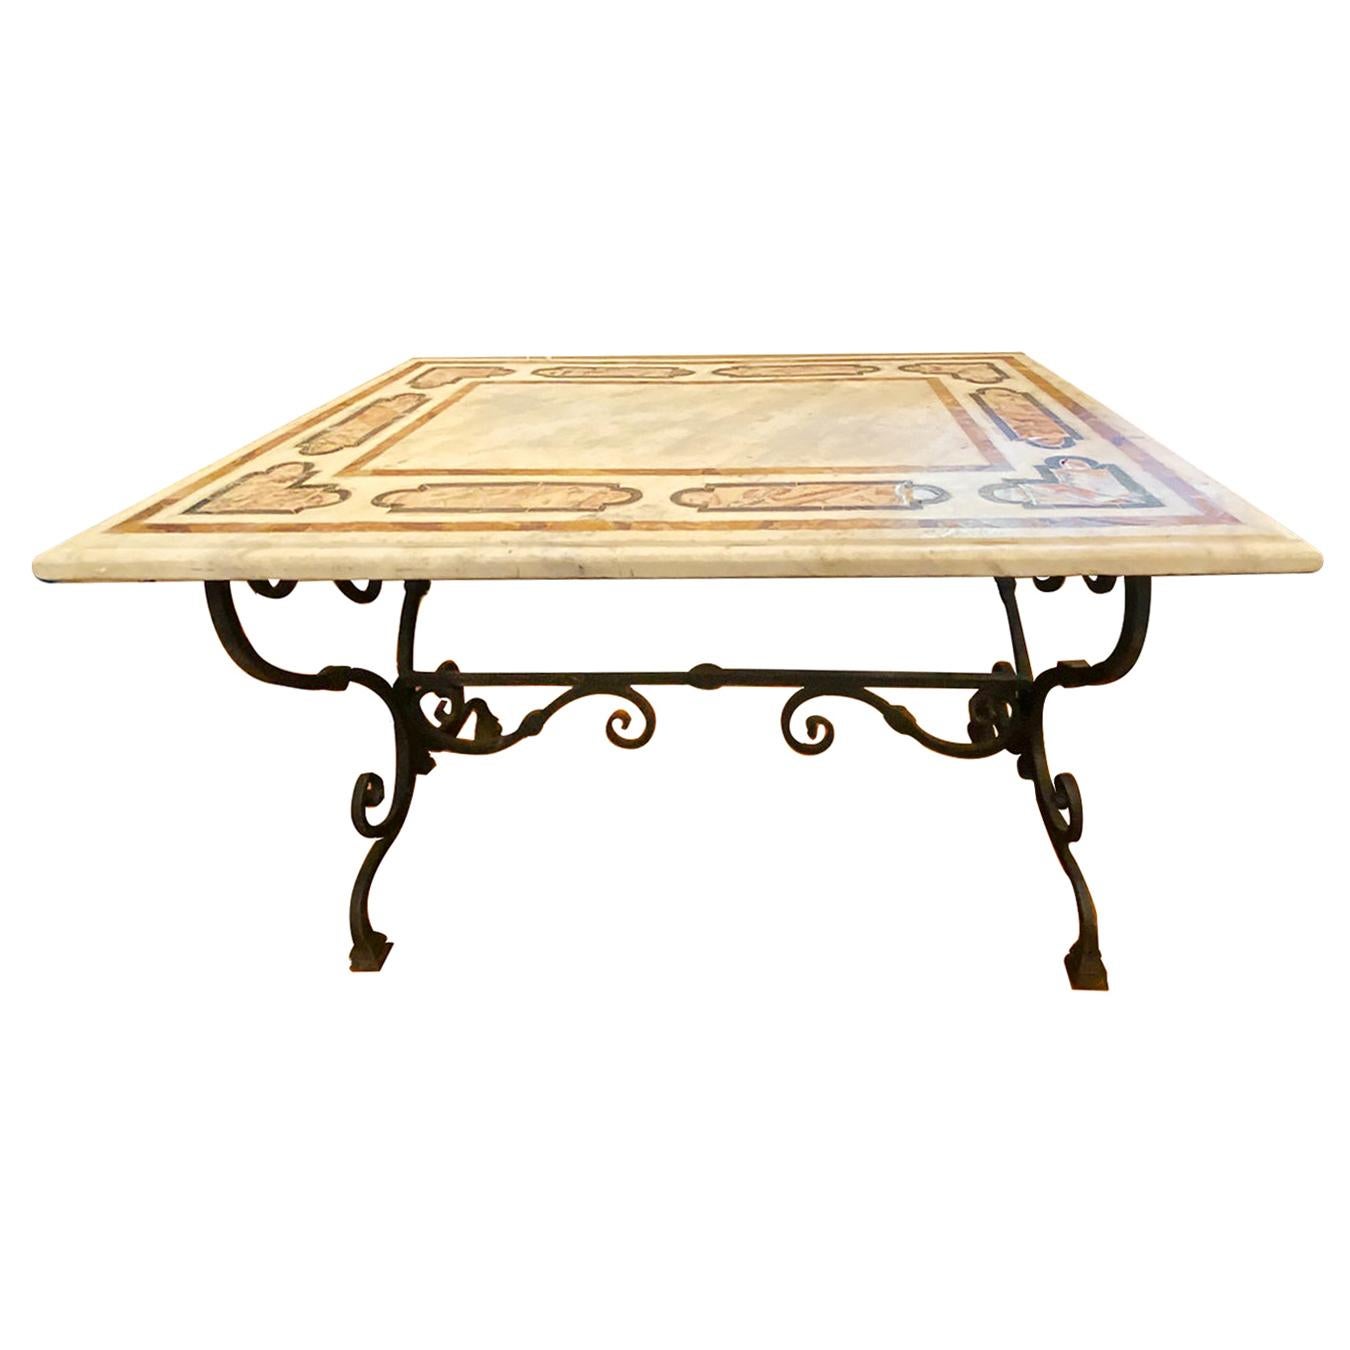 Pietra Dura Top Wrought Iron Table